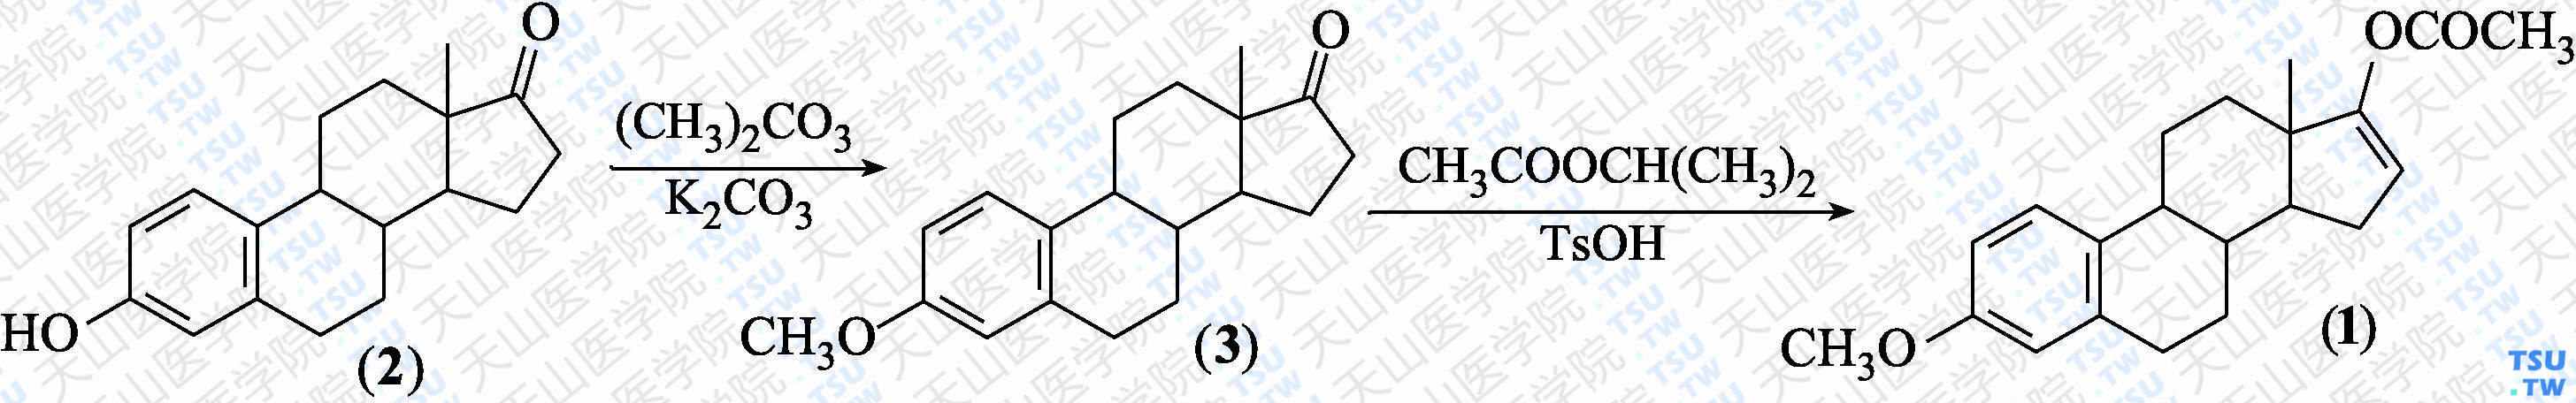 3-甲氧基-1，3，5（10），16-四烯雌烷-17-醇乙酸酯（分子式：C<sub>21</sub>H<sub>26</sub>O<sub>3</sub>）的合成方法路线及其结构式